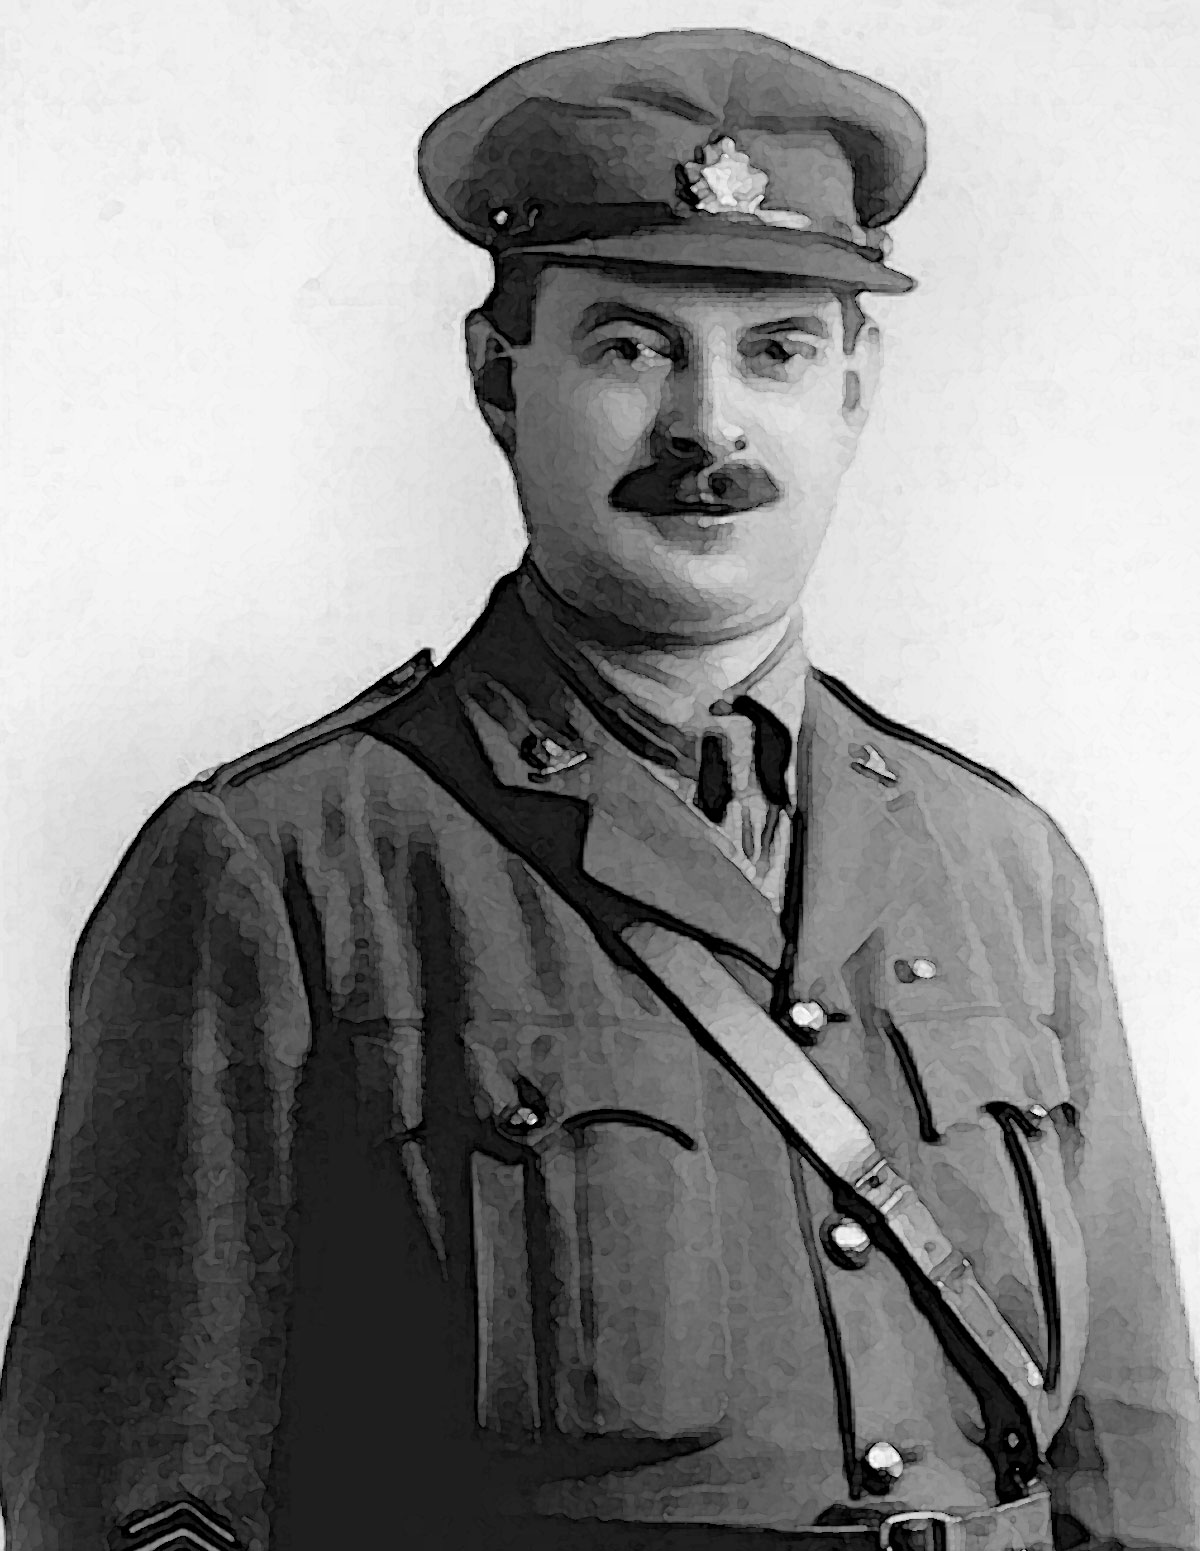 Lt. Edward Donald Bellew